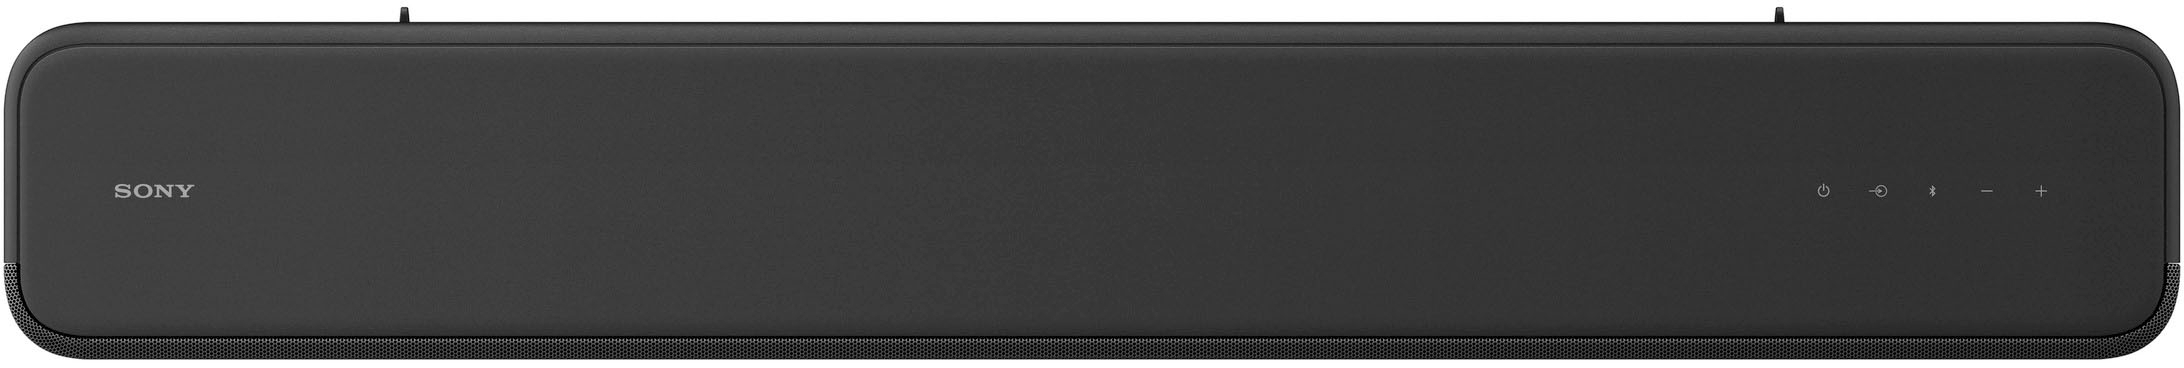 Sony HT-S2000 HTS2000 Best Atmos Dolby - Compact Black 3.1ch Buy Soundbar